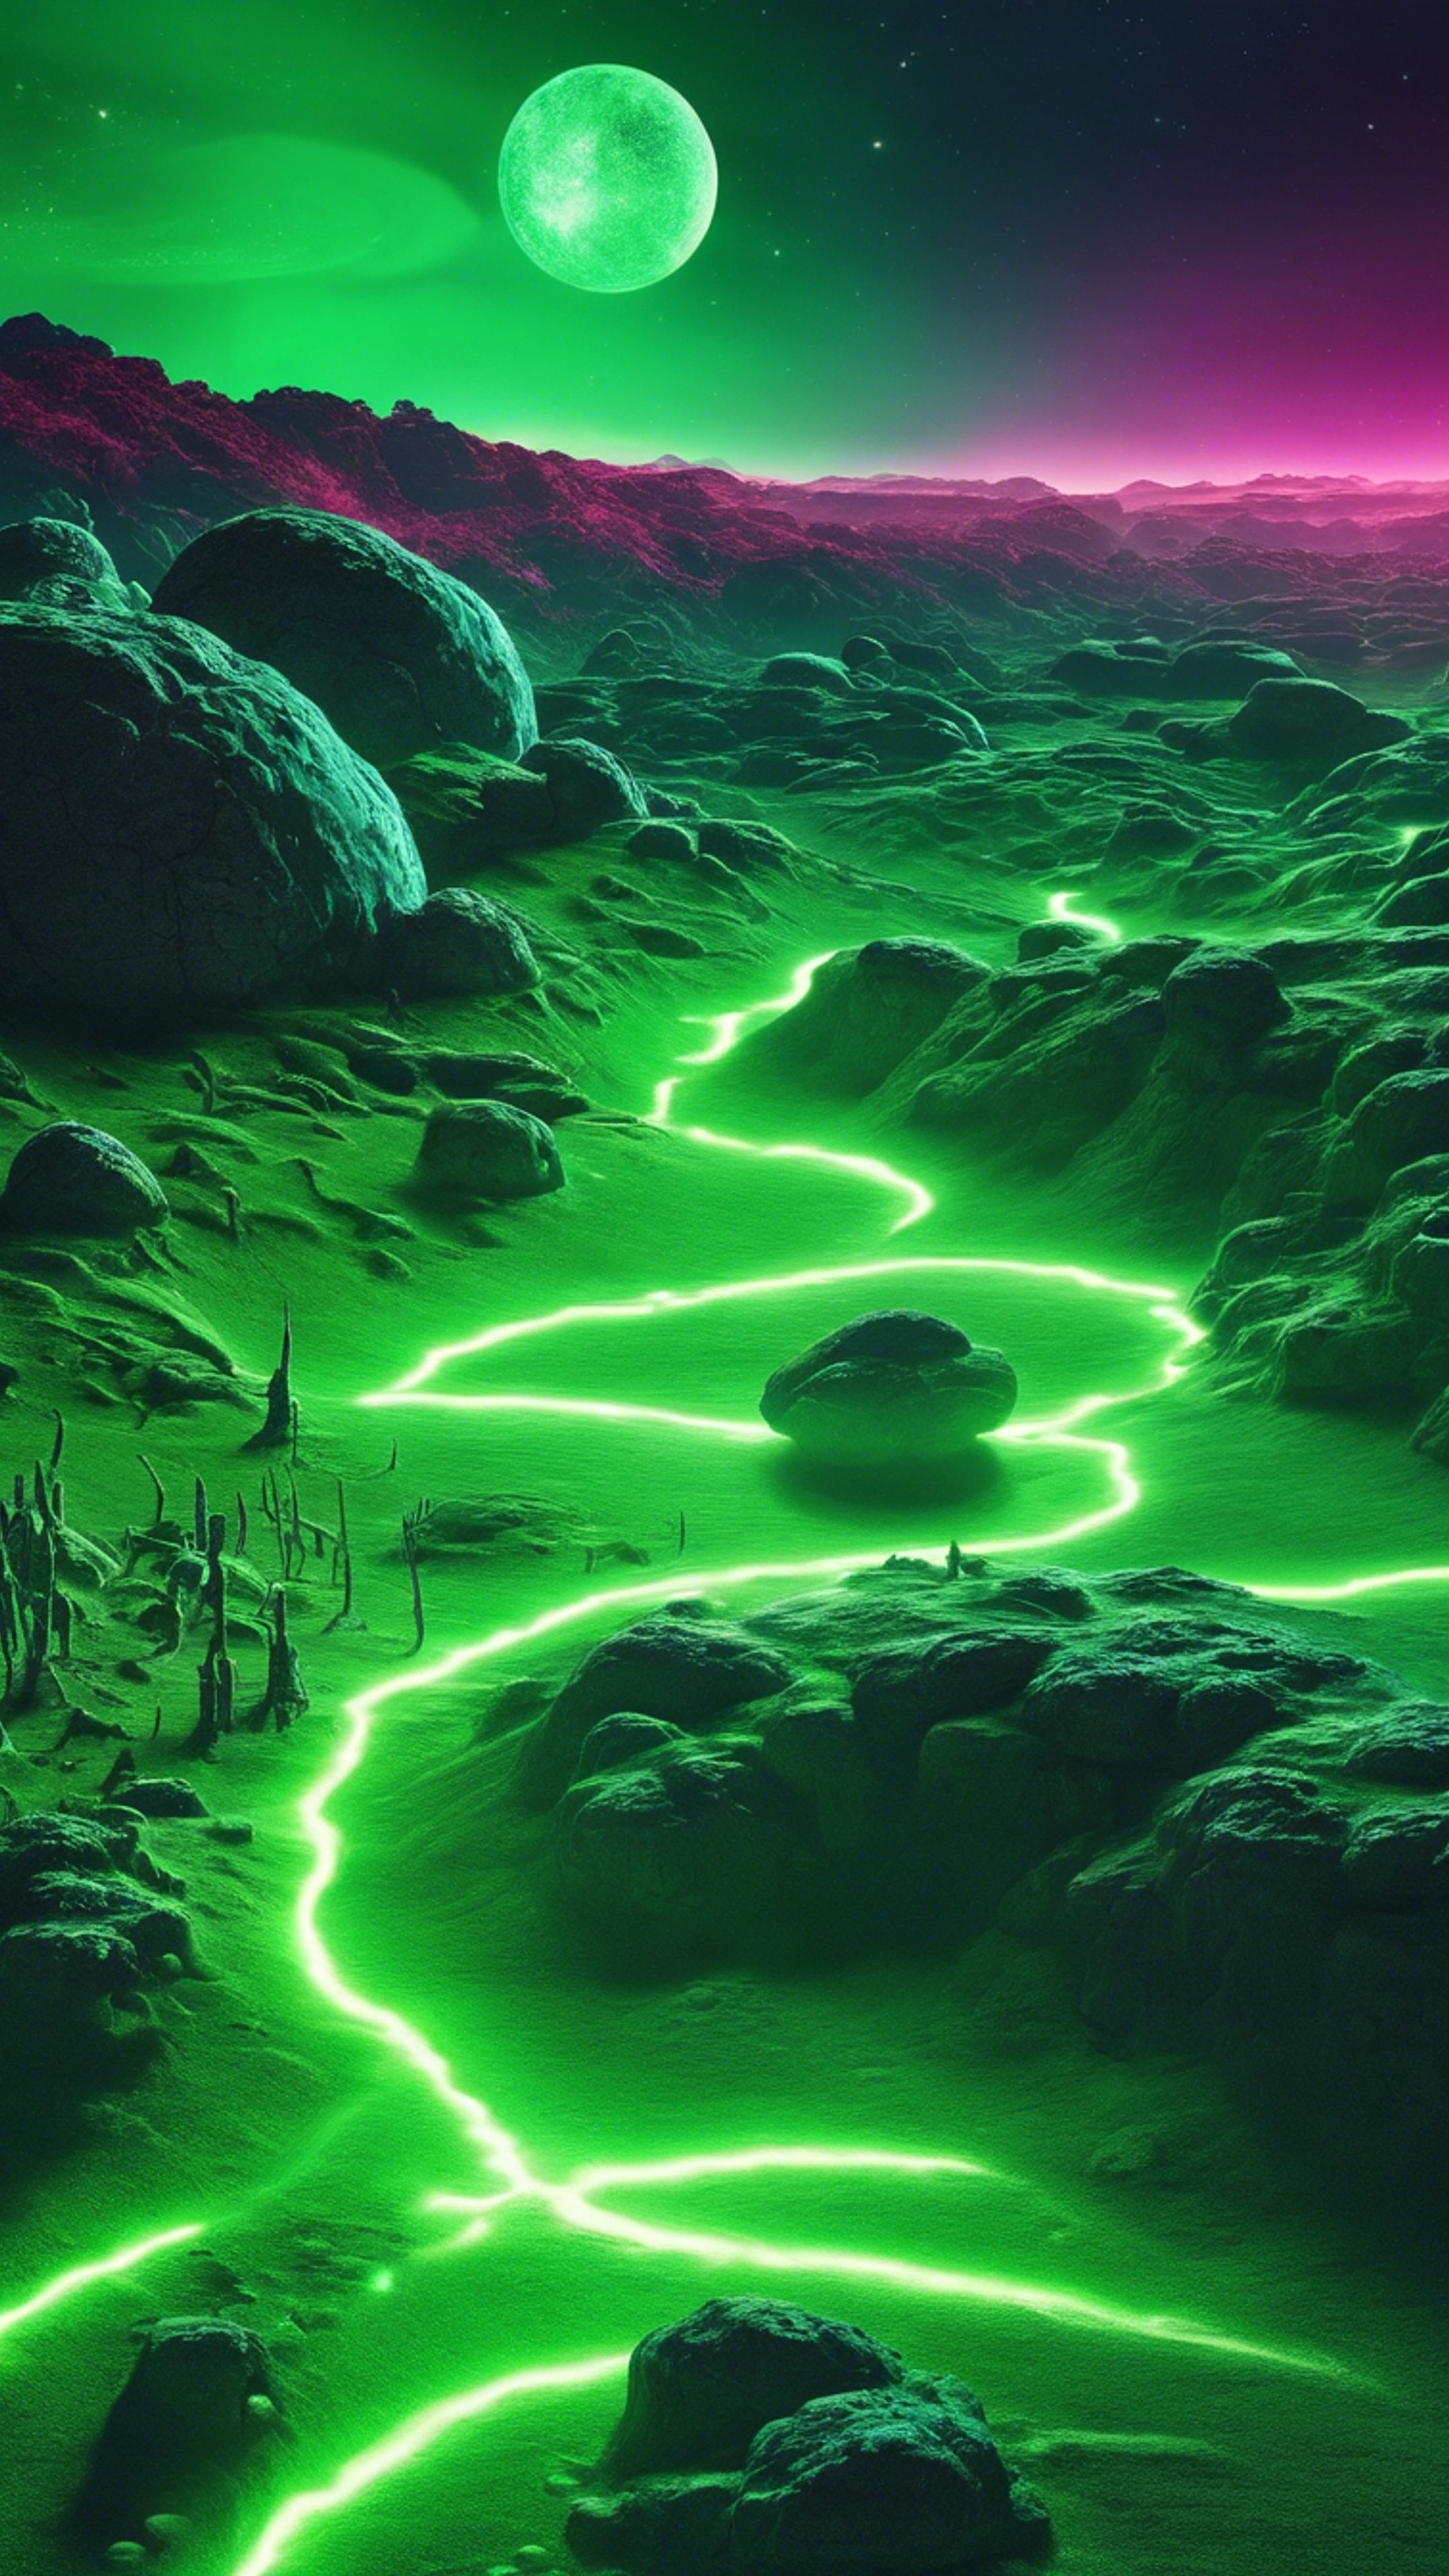 An alien planet landscape illuminated with cool neon green light. Hintergrund[c1d7fd56055c47ca89e3]